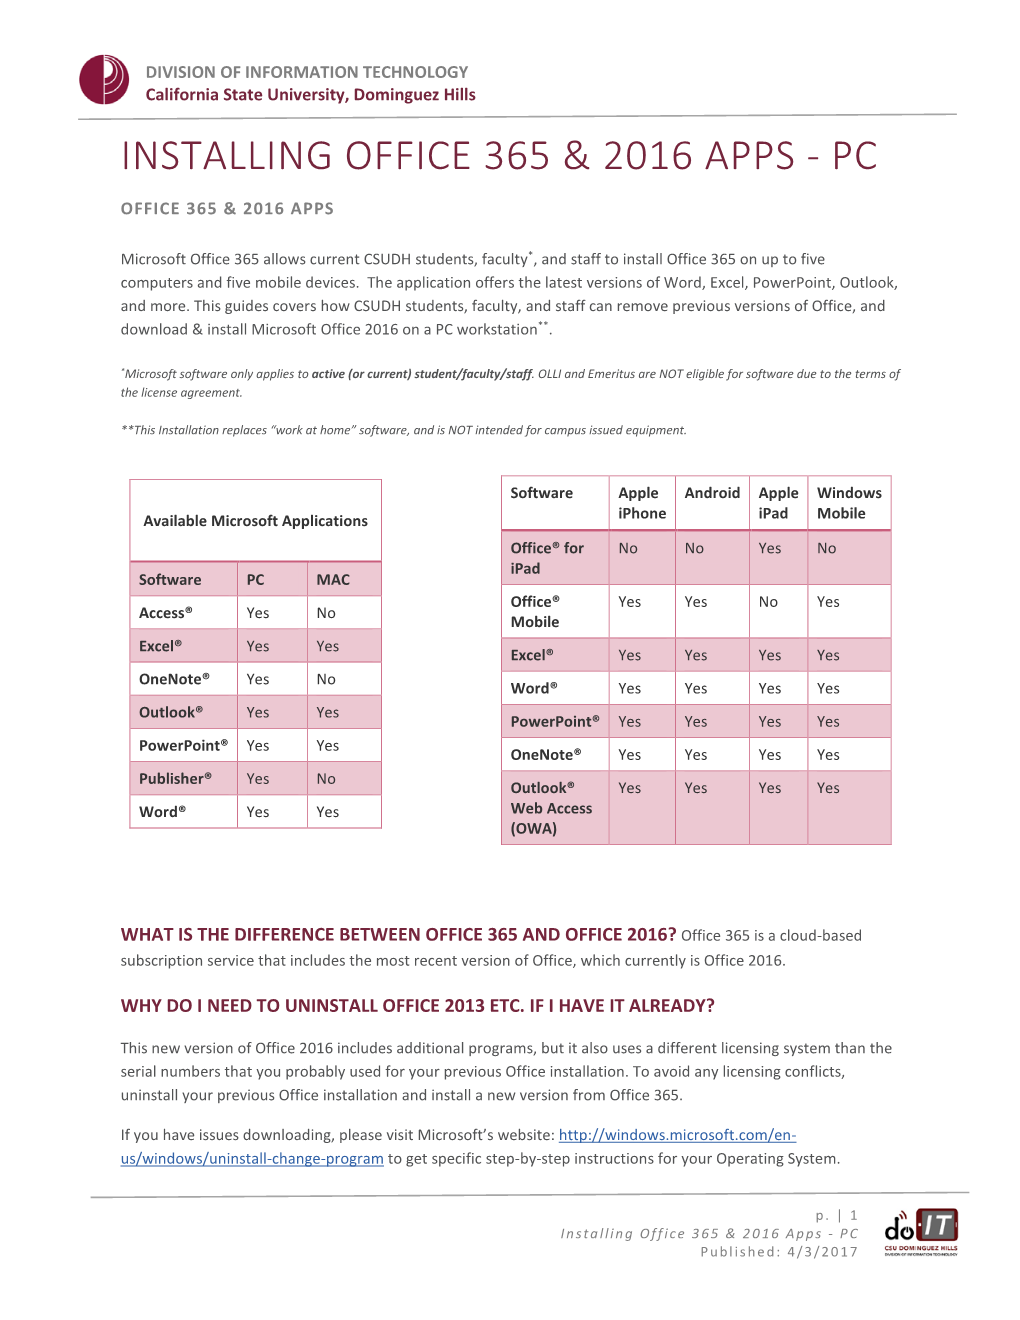 Installing Office 365 & 2016 Apps